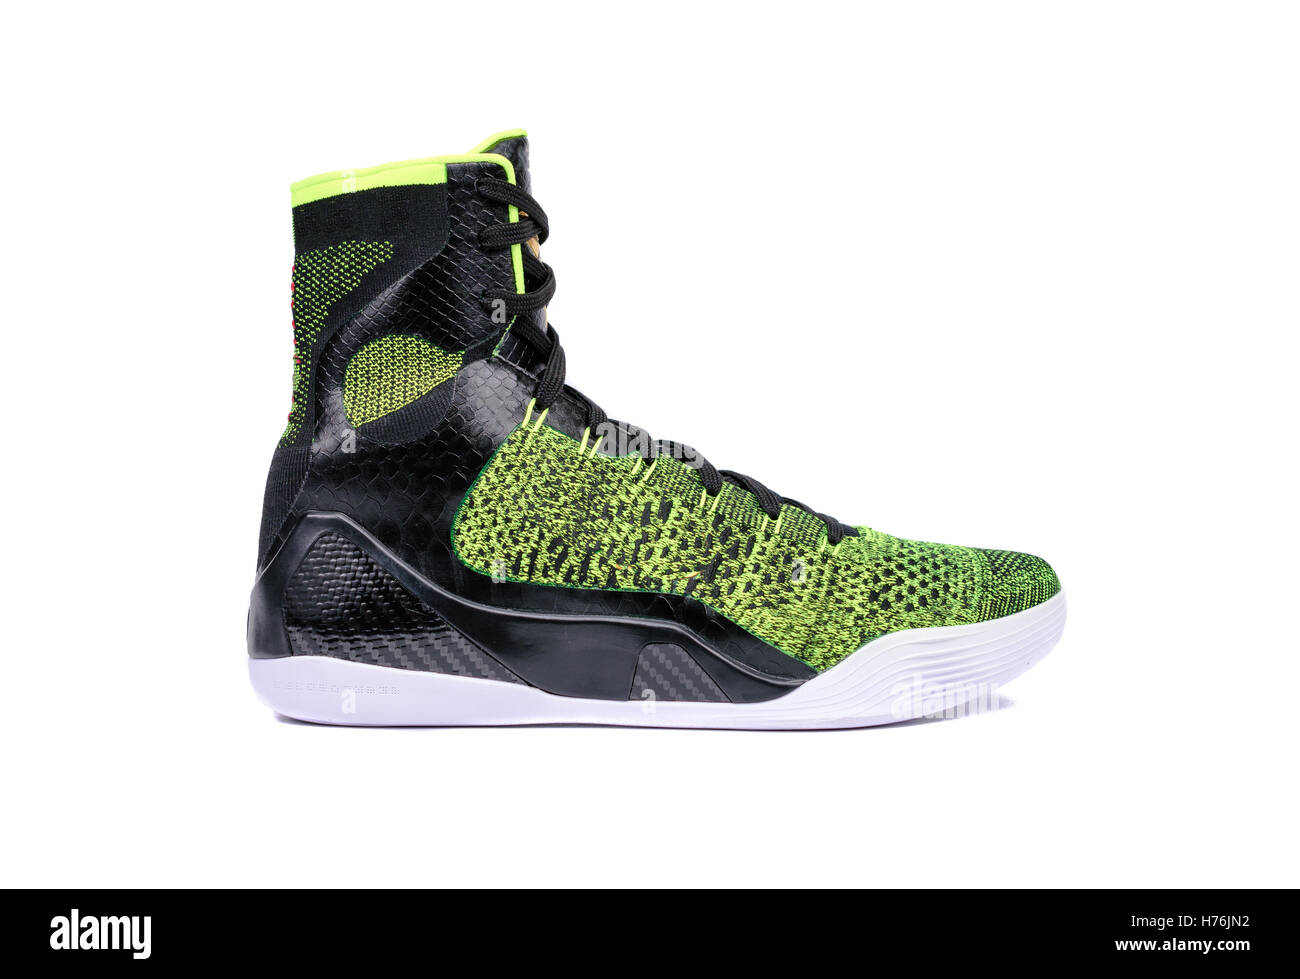 Haut ultra moderne vert et noir top sneaker chaussure de basket, isolated on white Banque D'Images